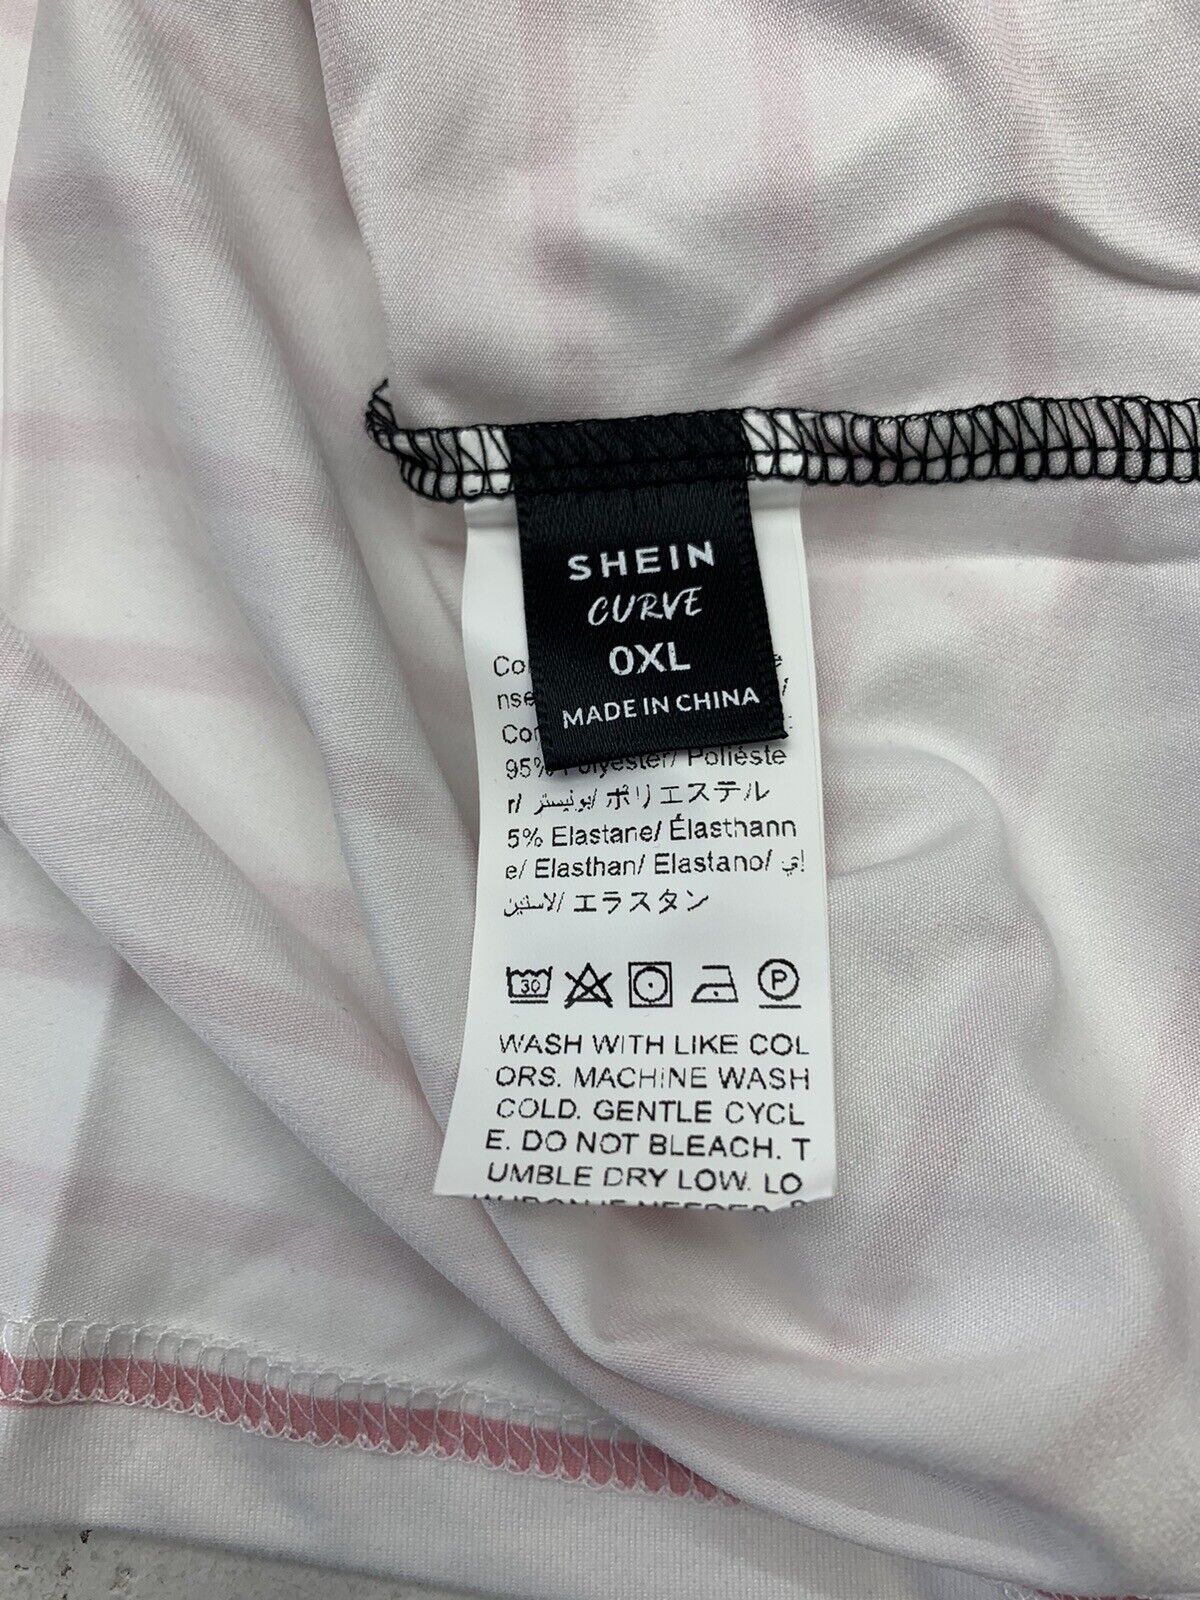 Shein Curve Womens Black White Pink Short Sleeve Shirt Size 0XL